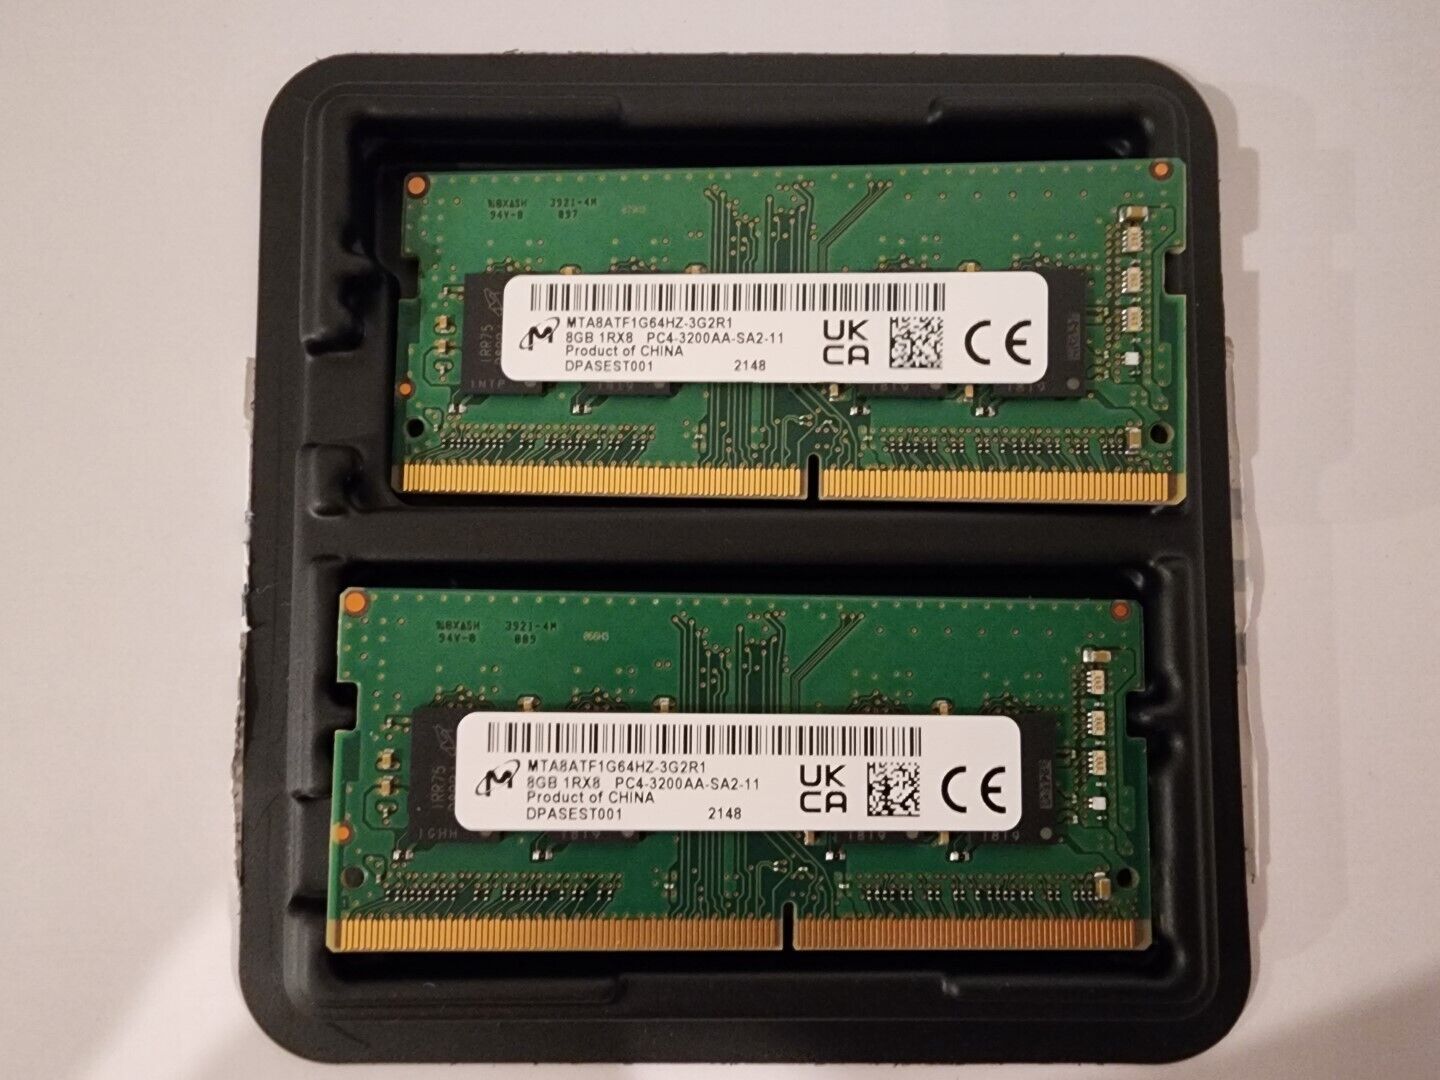 2x Micron (8GB) DDR4 1Rx16 (PC4-25600) RAM Memory MTA8ATF1G64HZ-3G2R1 - HP OEM